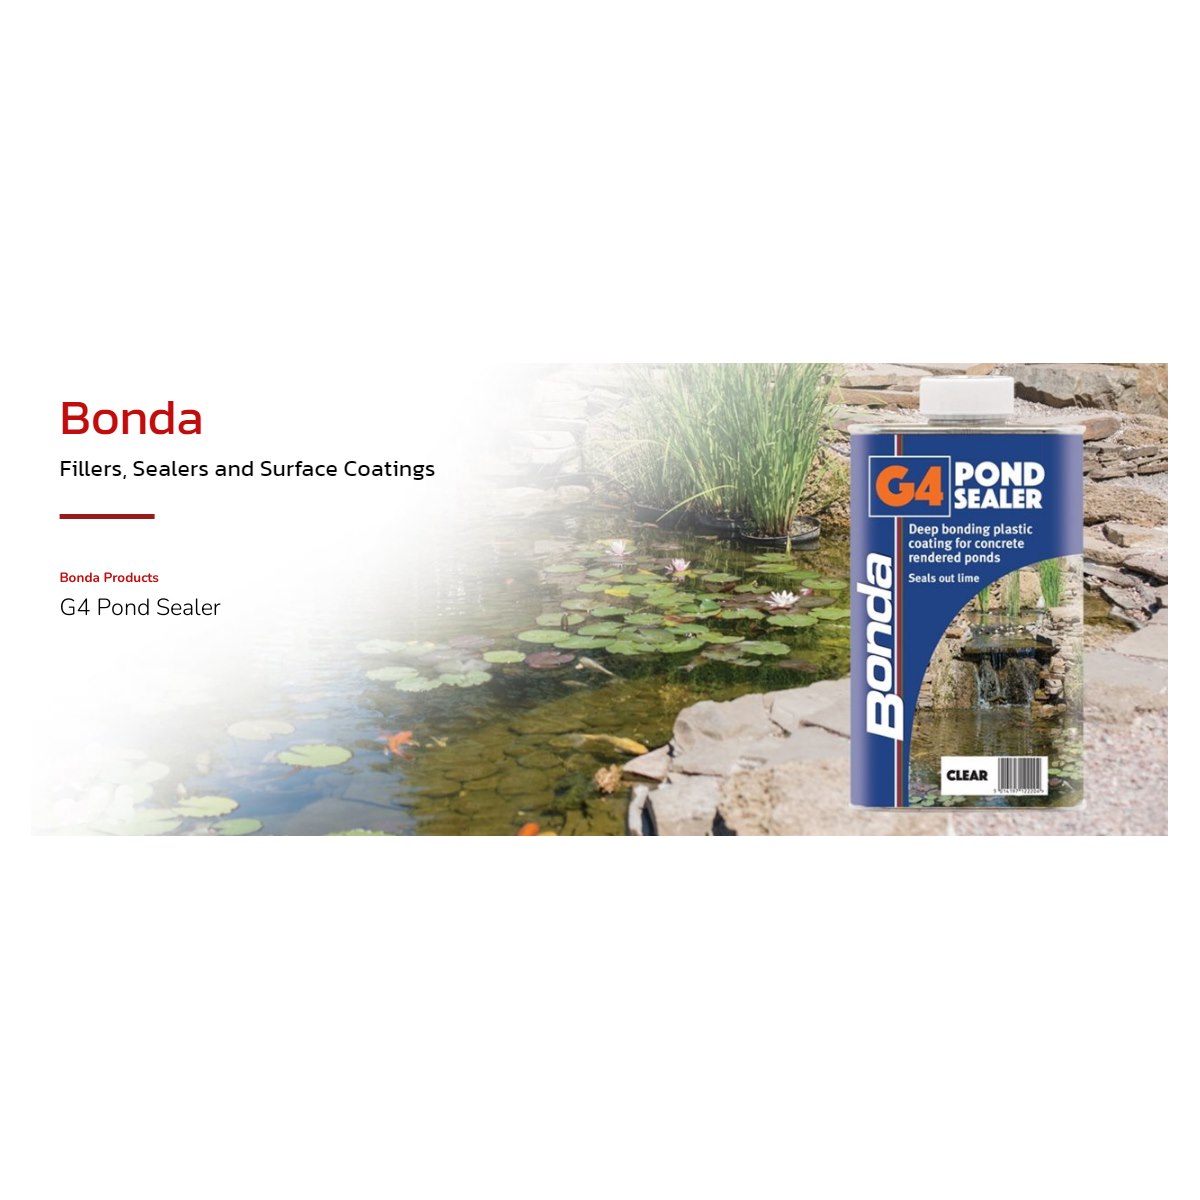 Where to Buy Bonda Pond Sealer